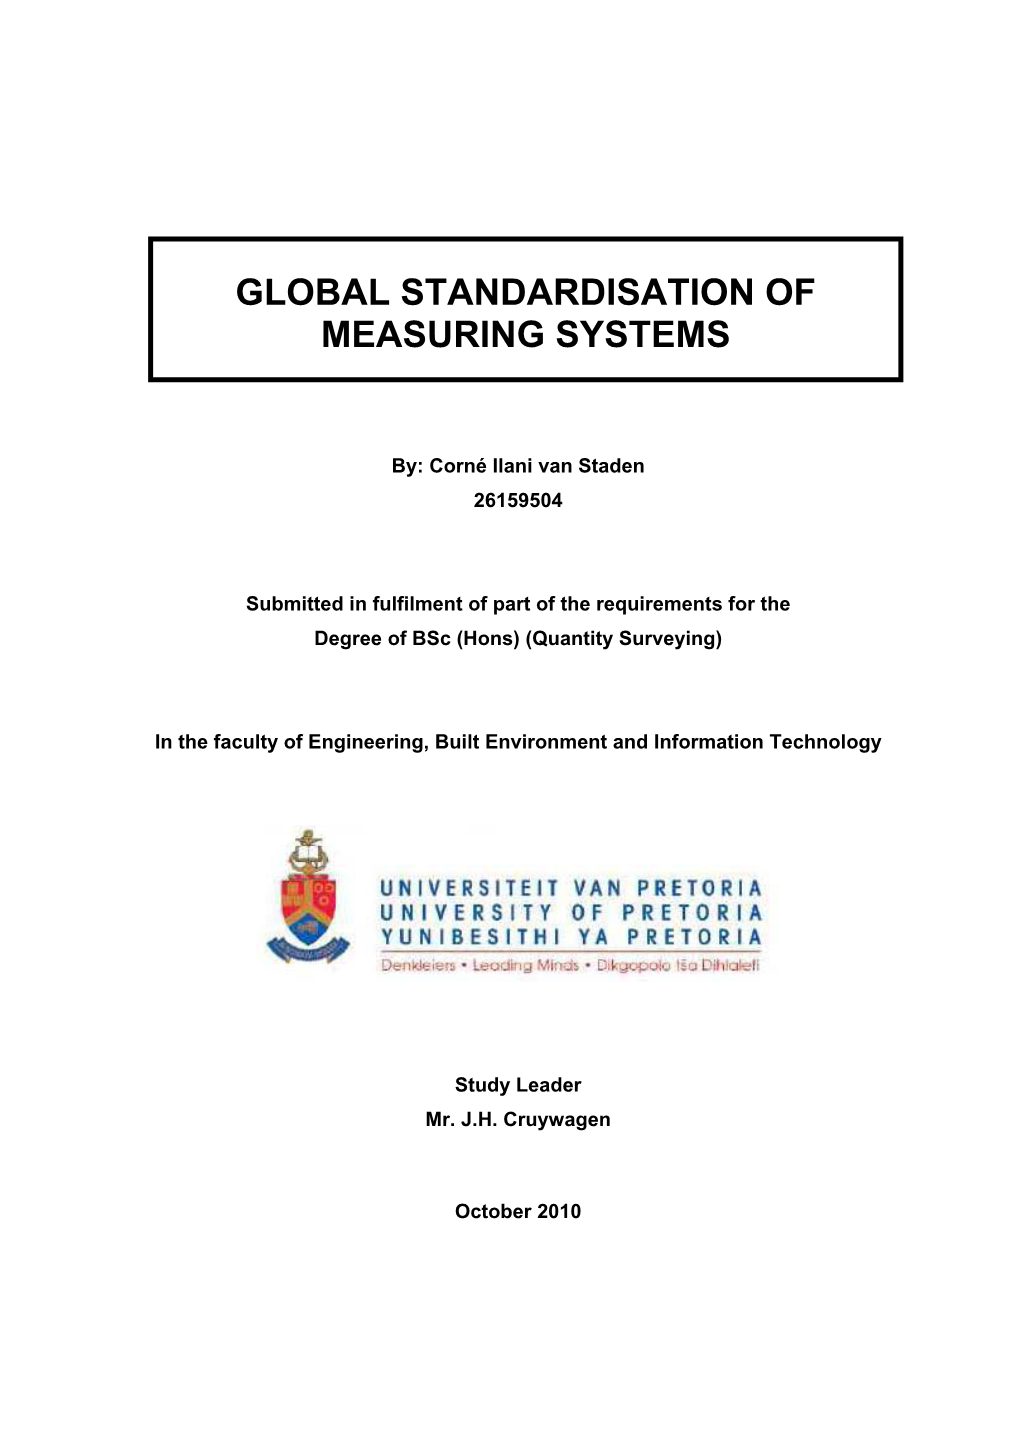 Global Standardisation of Measuring Systems